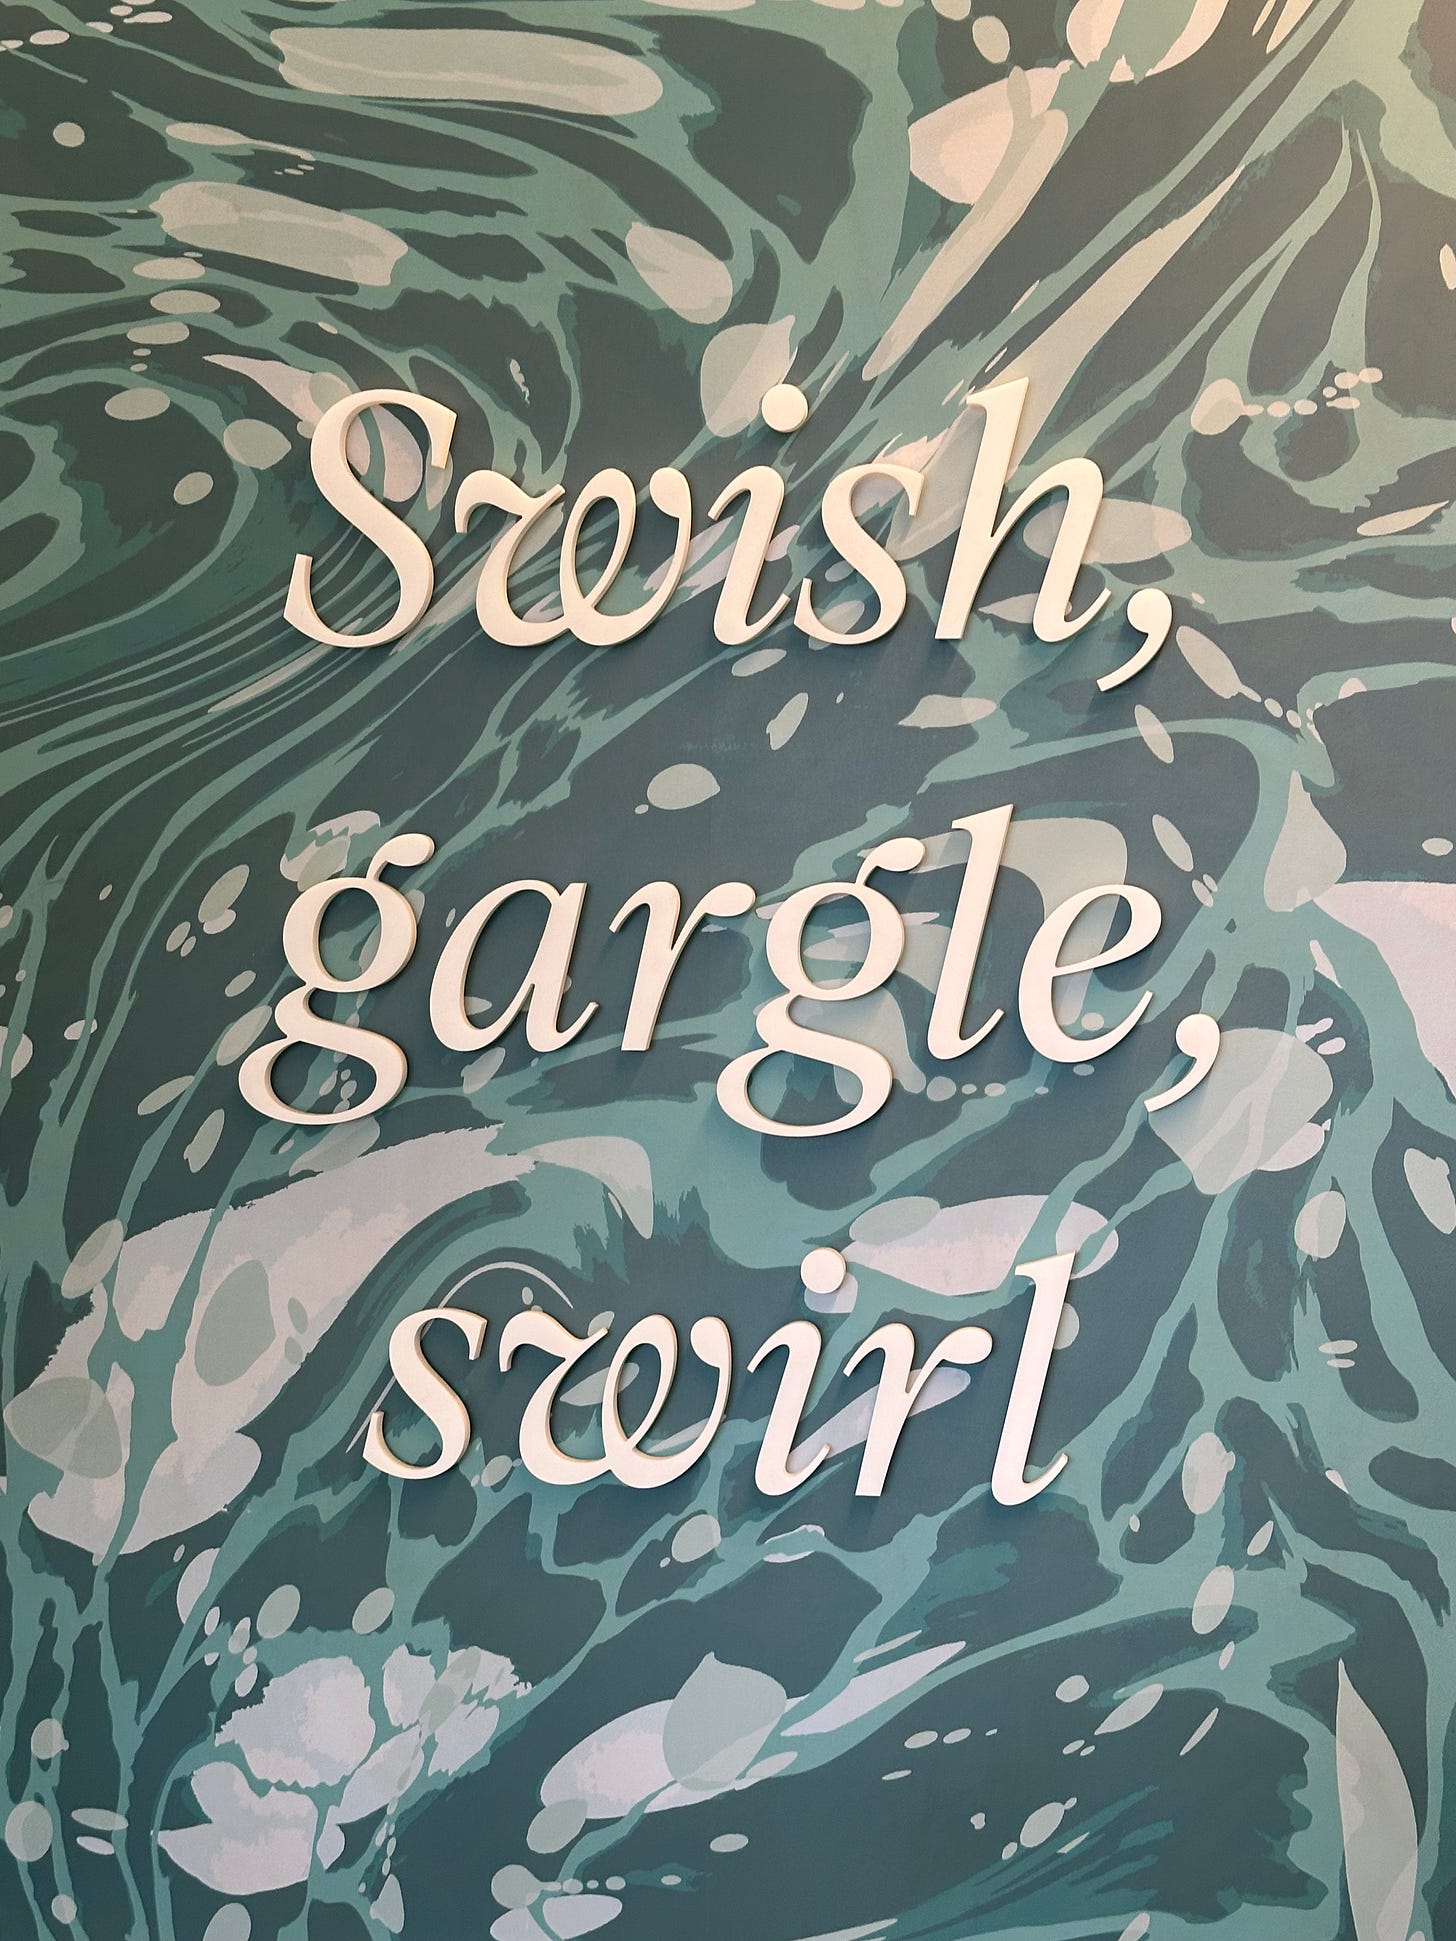 "Swish, gargle, swirl" office artwork.